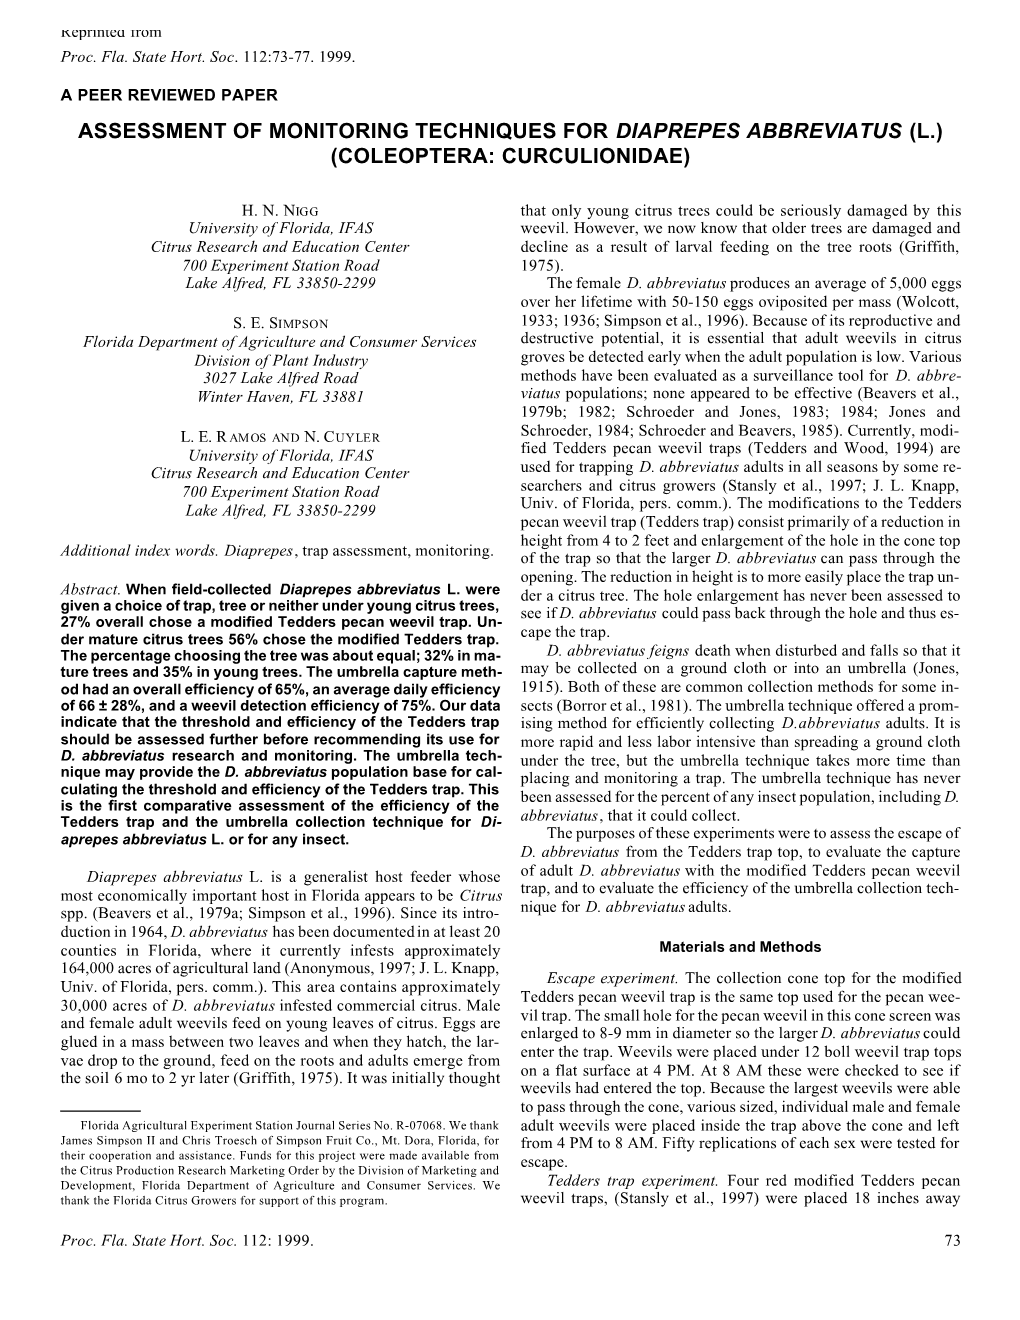 Assessment of Monitoring Techniques for Diaprepes Abbreviatus (L.) (Coleoptera: Curculionidae)